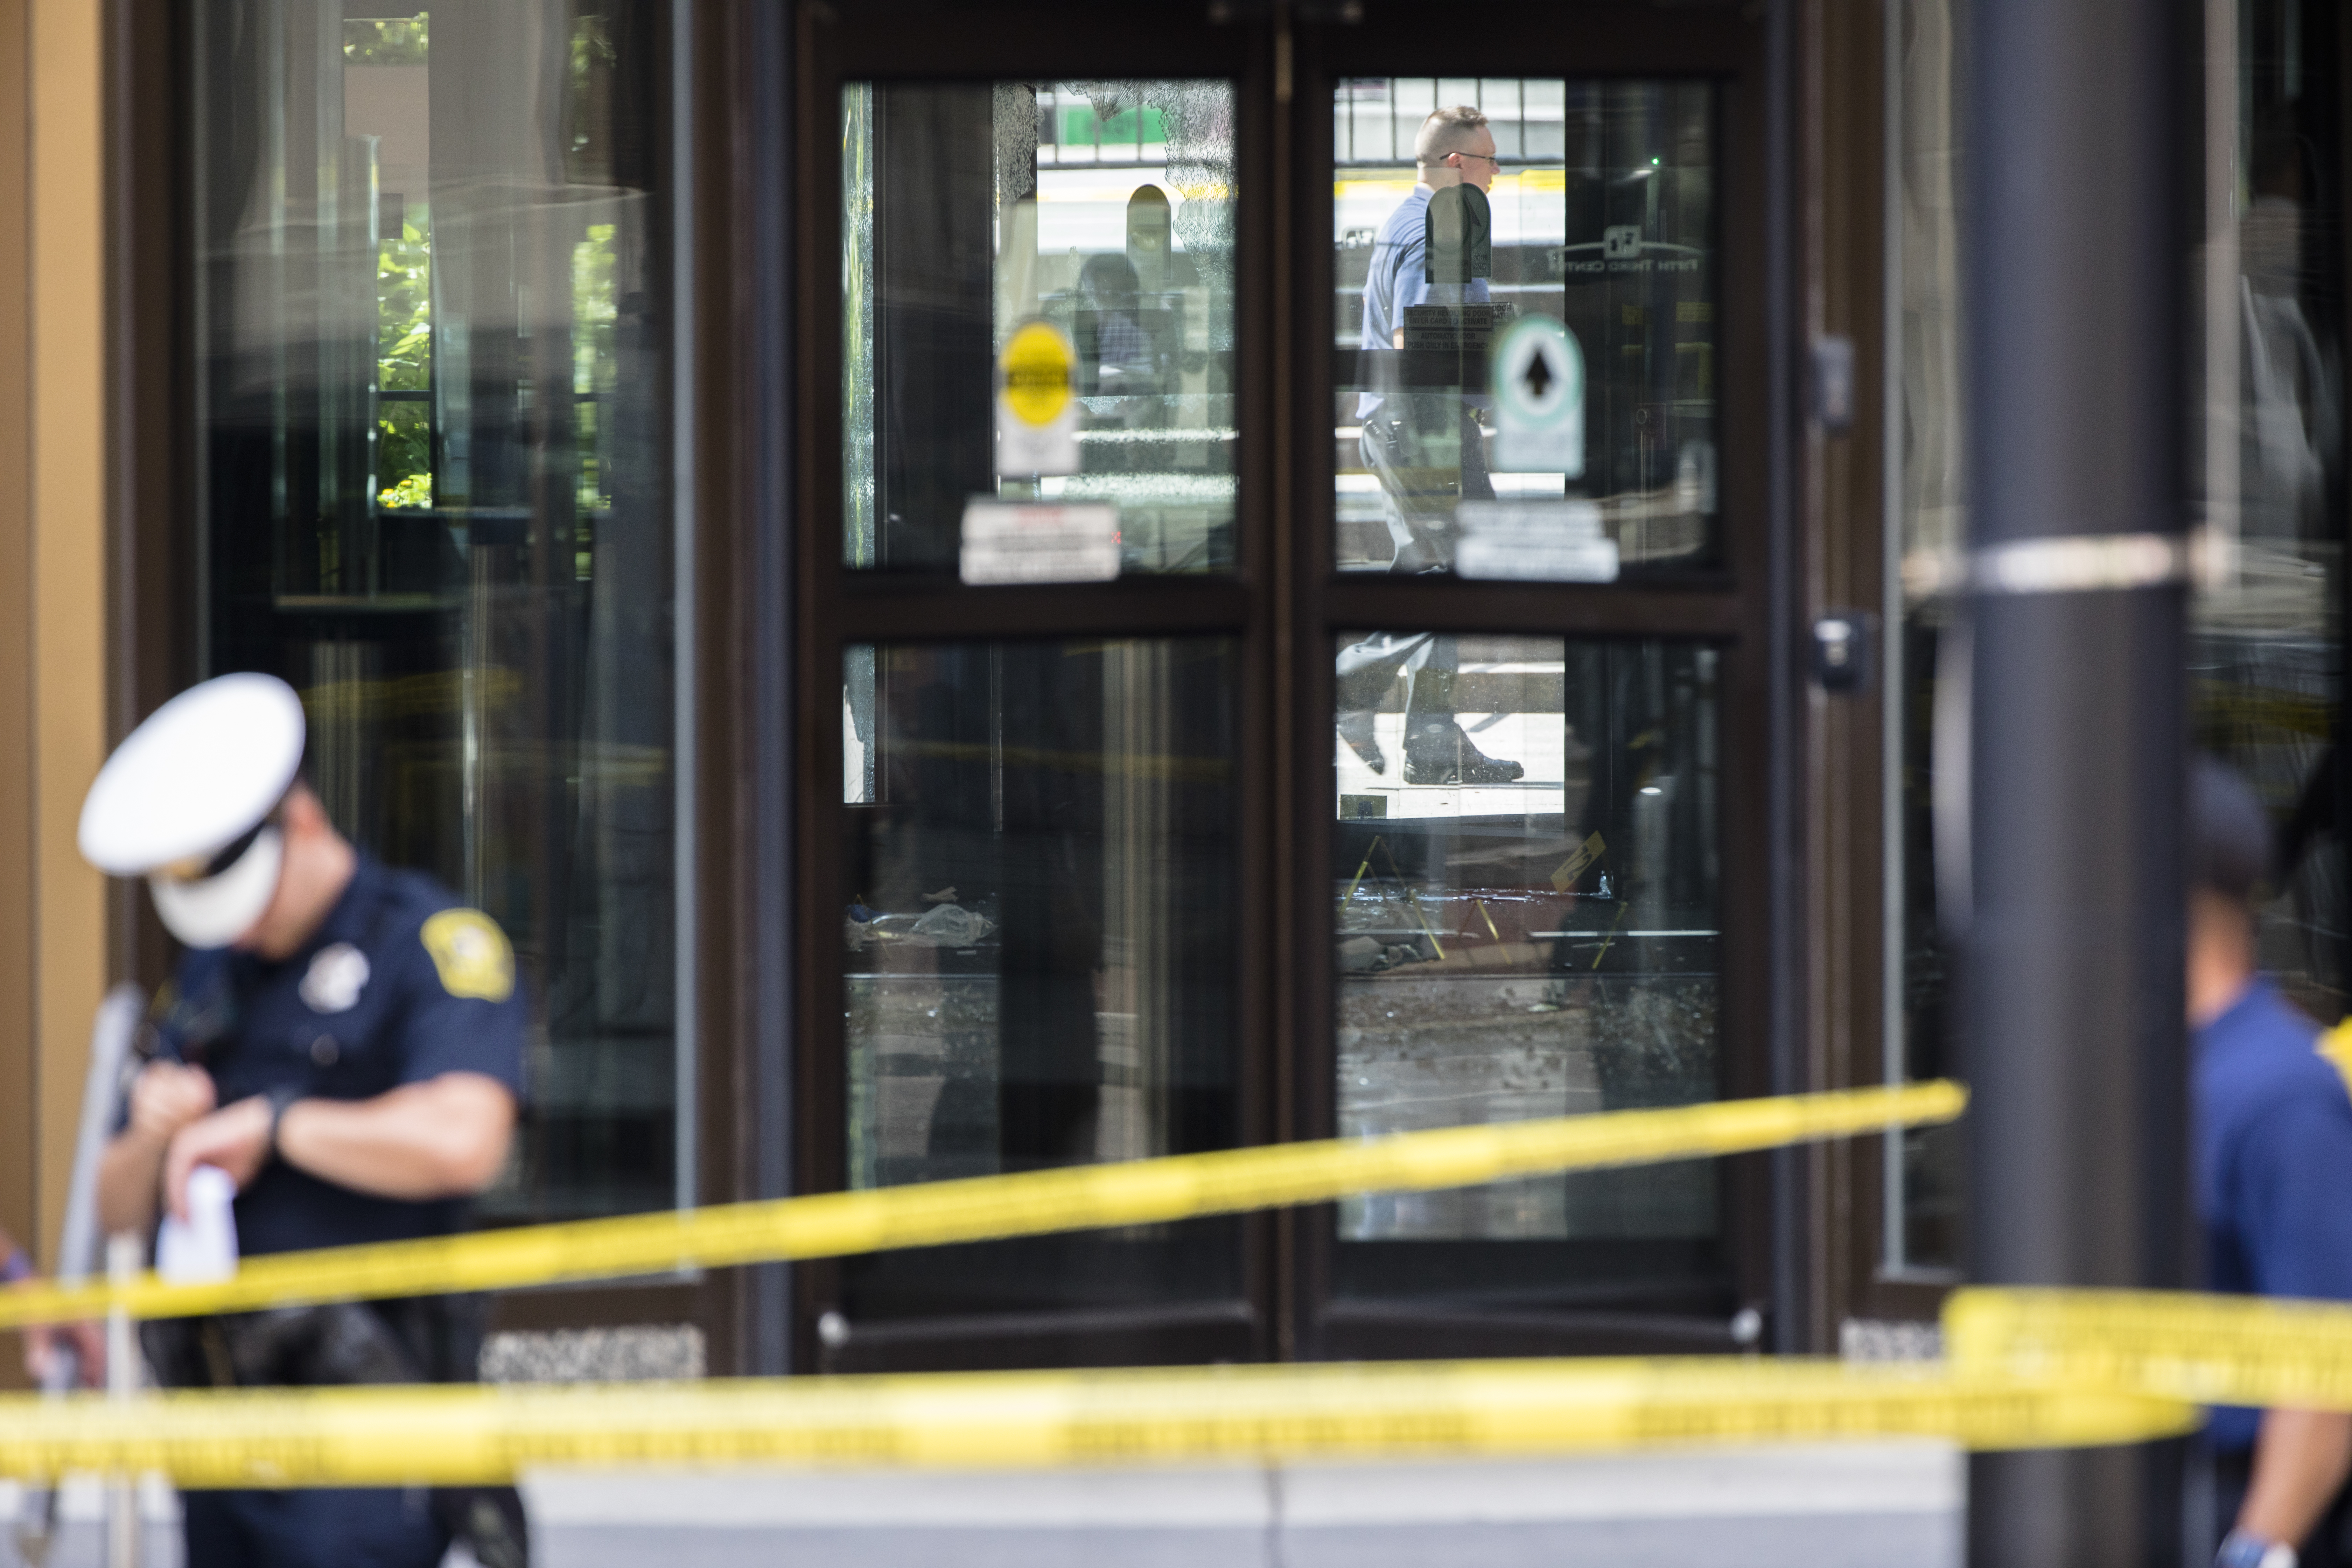 Police Trying to Determine Why Cincinnati Gunman Opened Fire